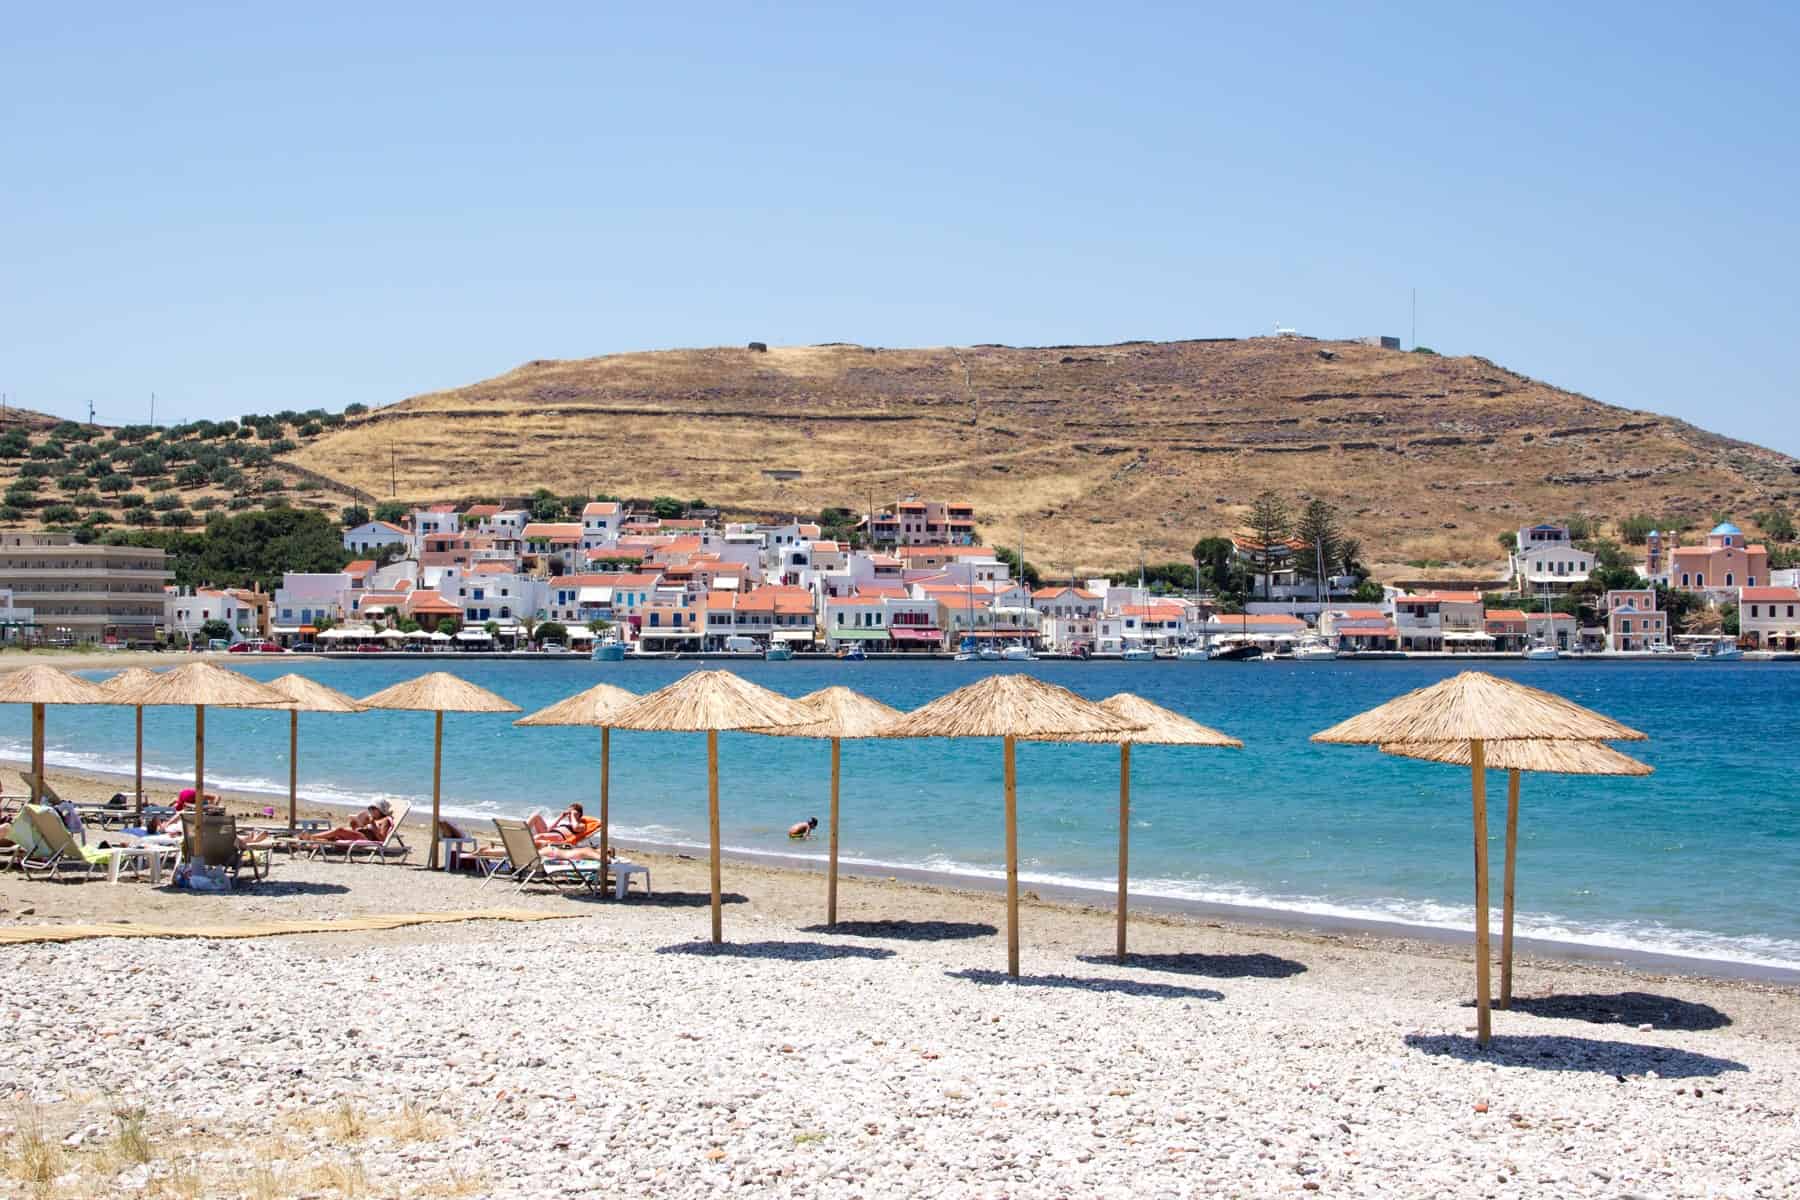 Straw umbrellas in a row on a stoney beach in the coastal town of Korissia on the Greek Kea island